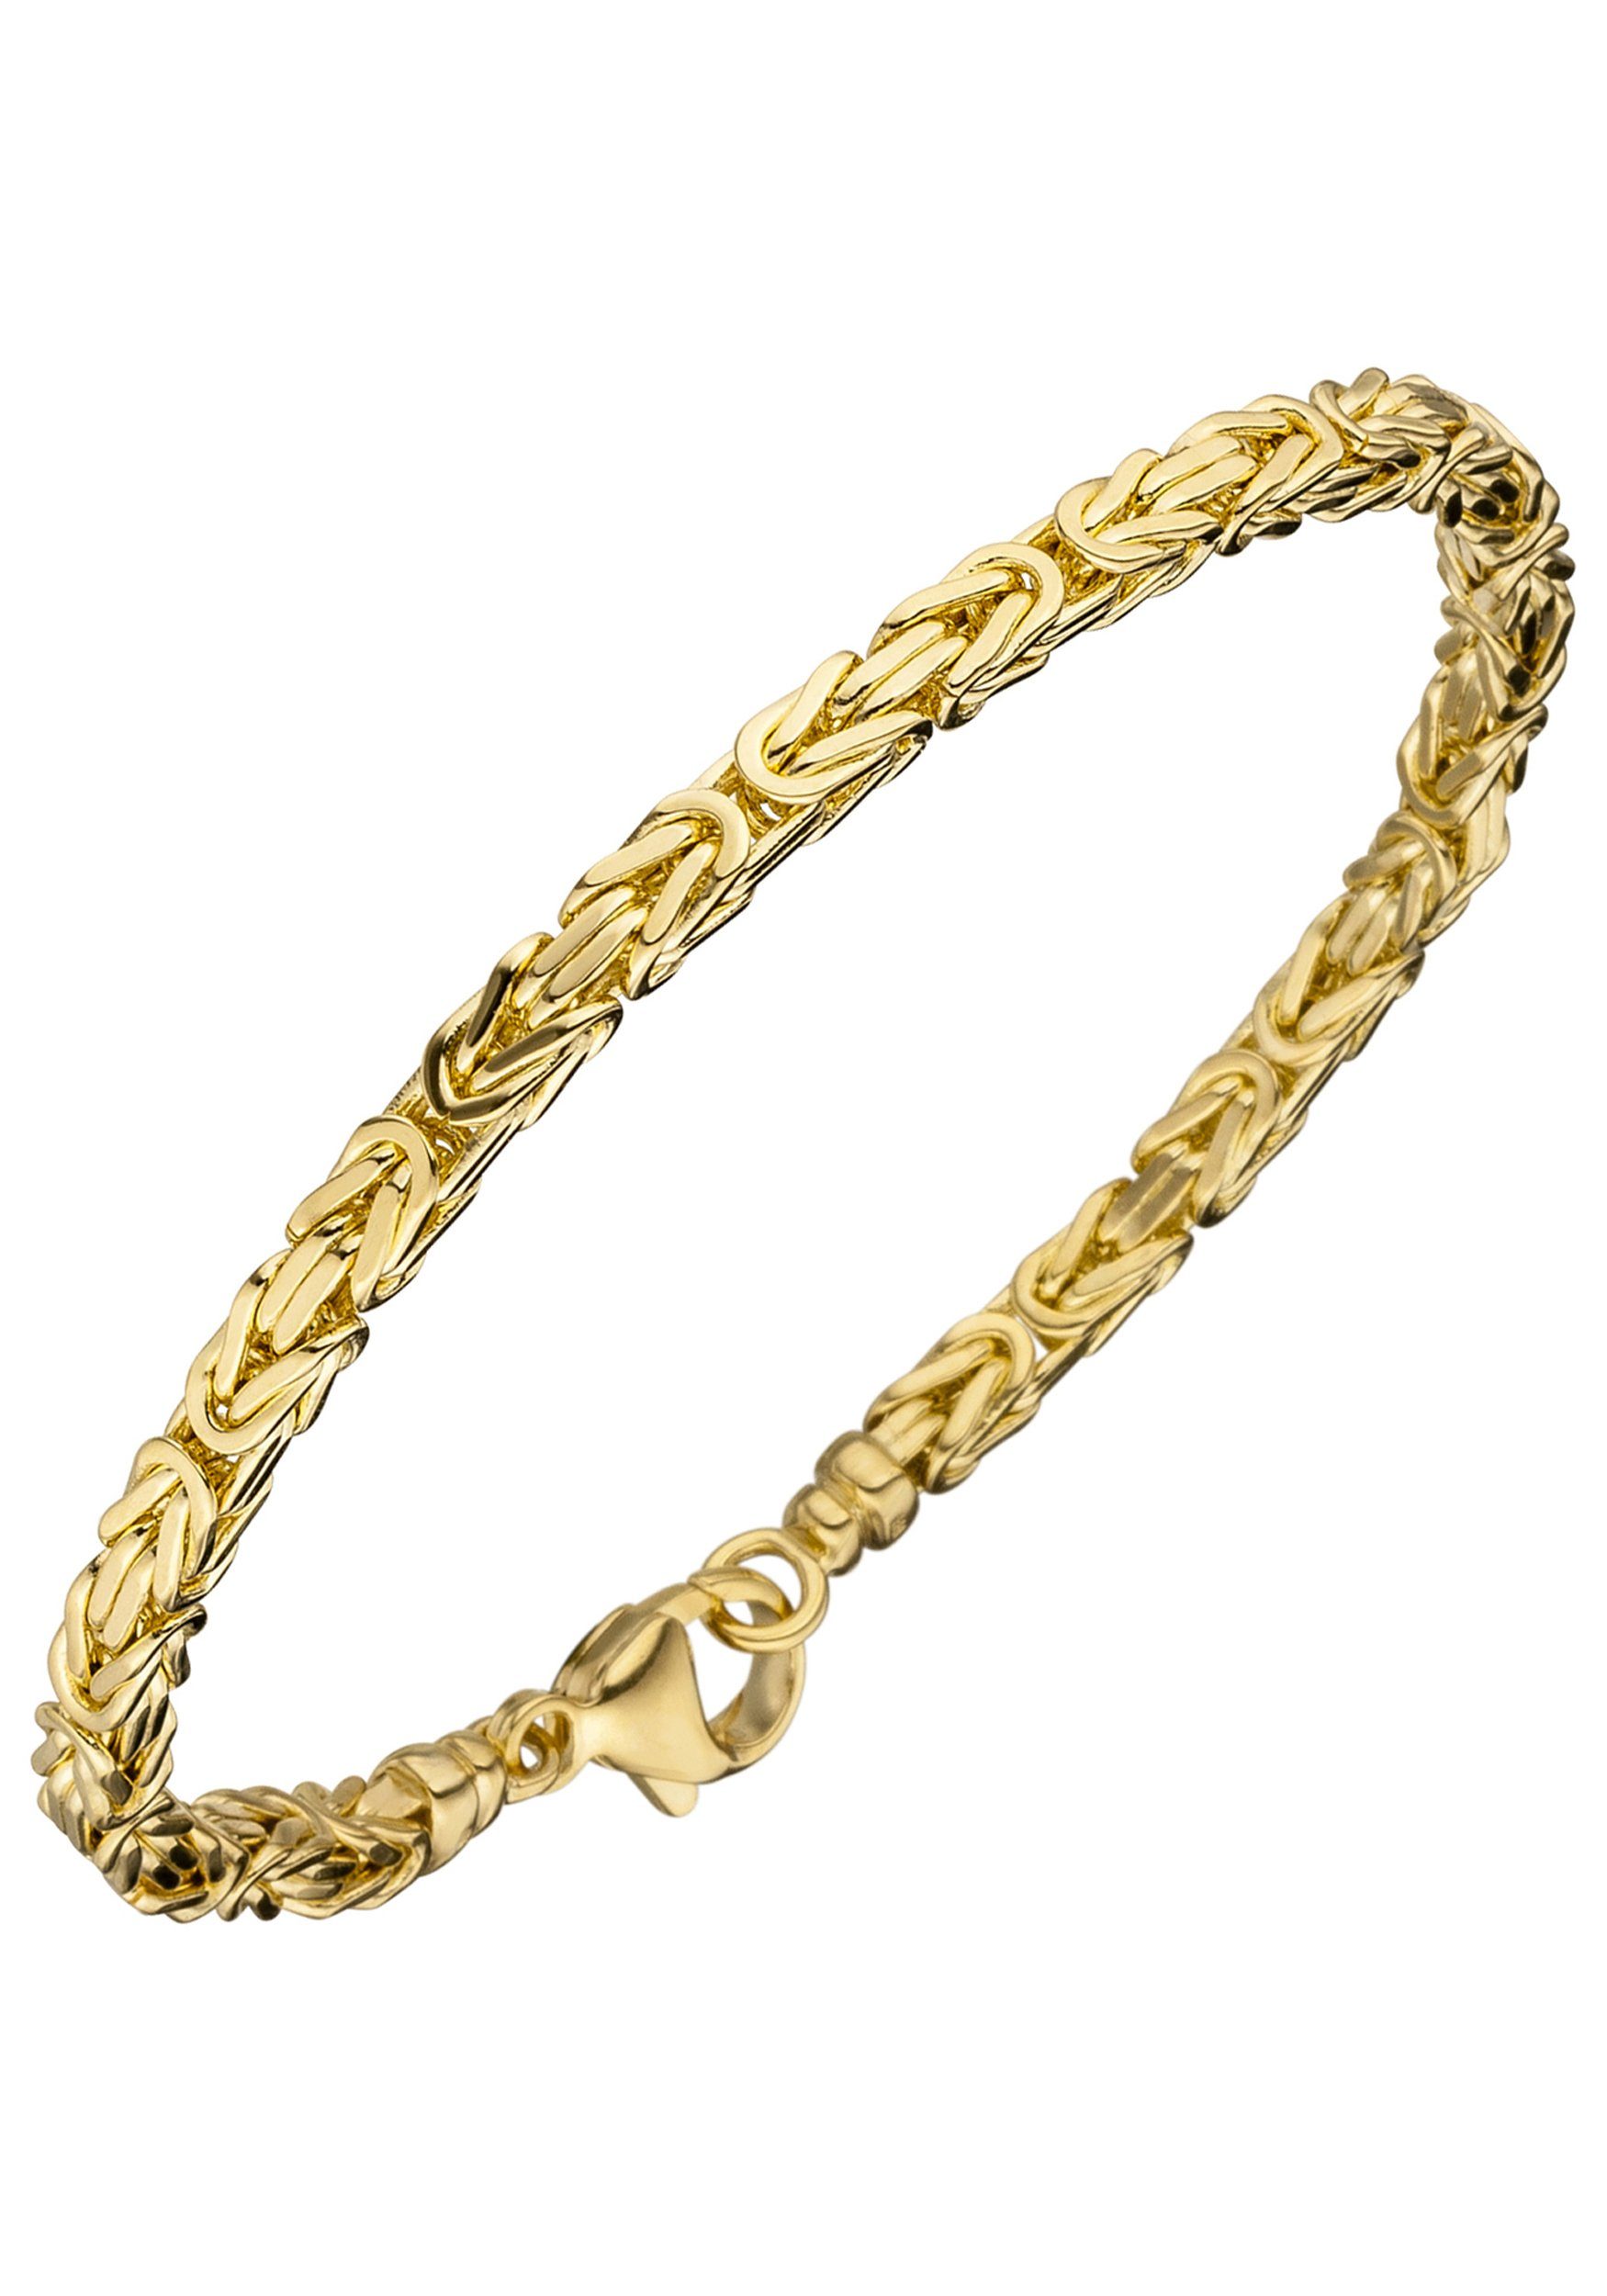 JOBO Goldarmband, Königsarmband 585 Gold massiv 19 cm online kaufen | OTTO